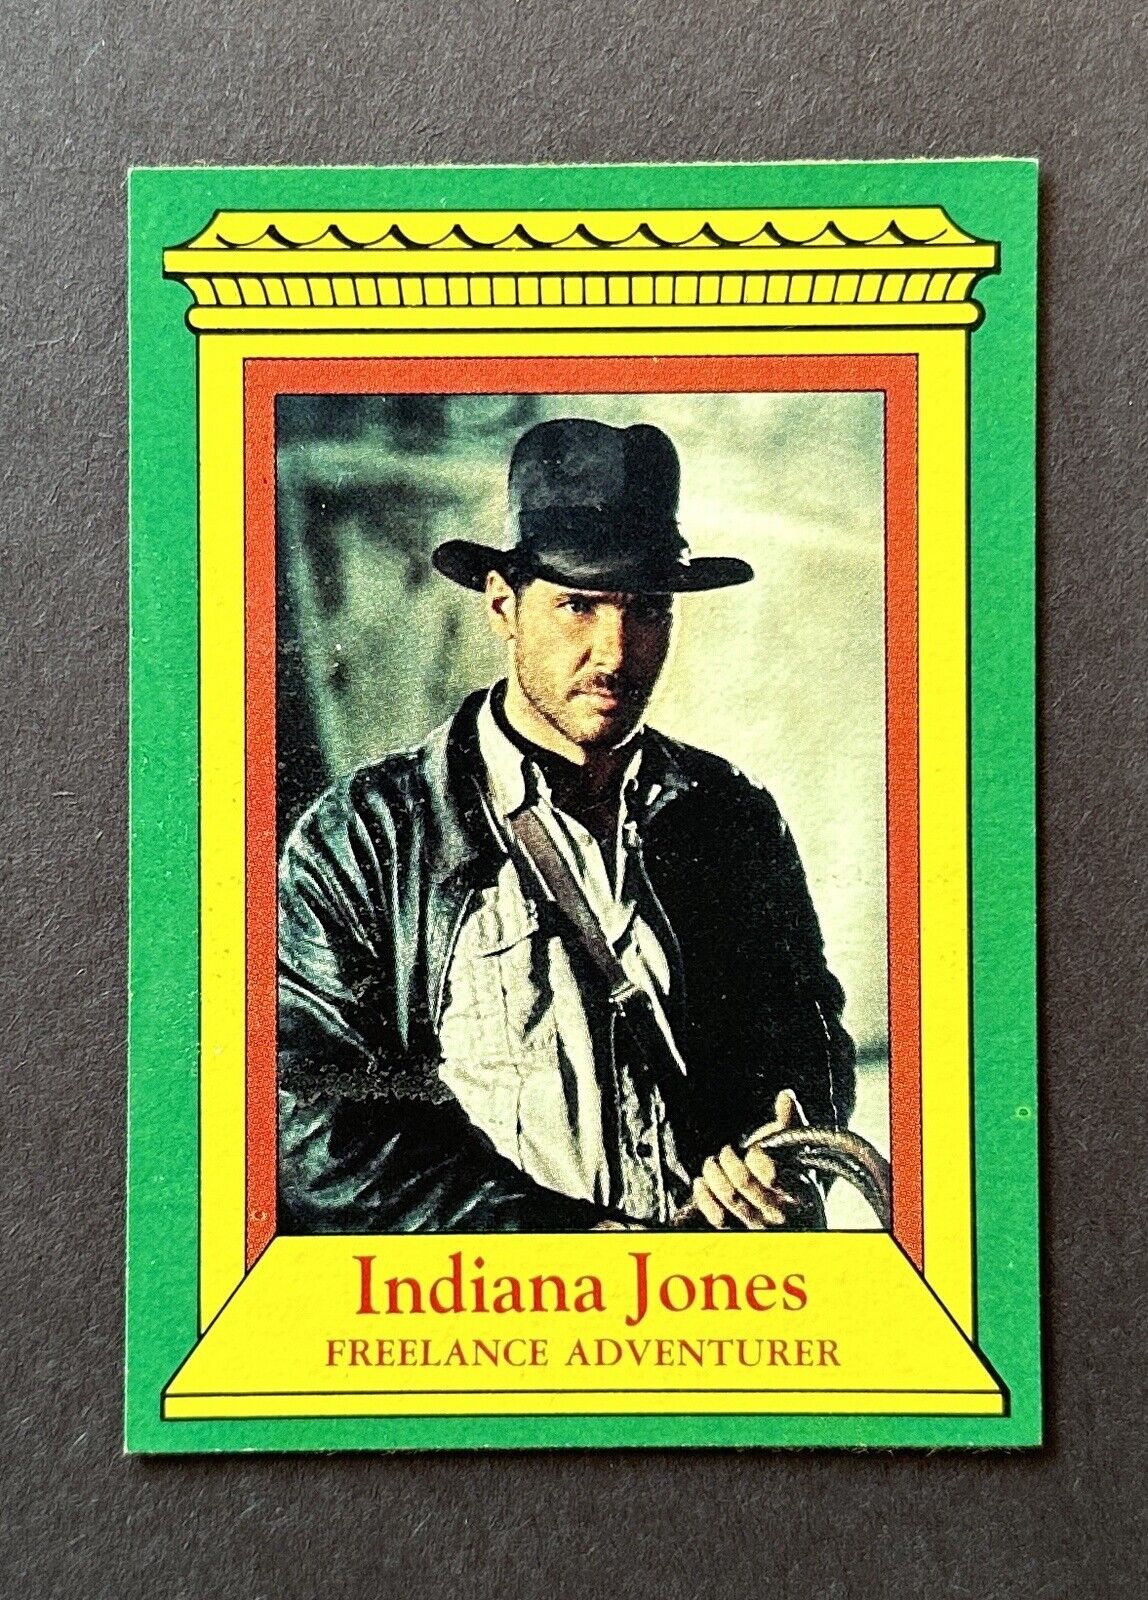 1981 Topps Raiders of the Lost Ark Indiana Jones Freelance Adventurer #2 Rookie